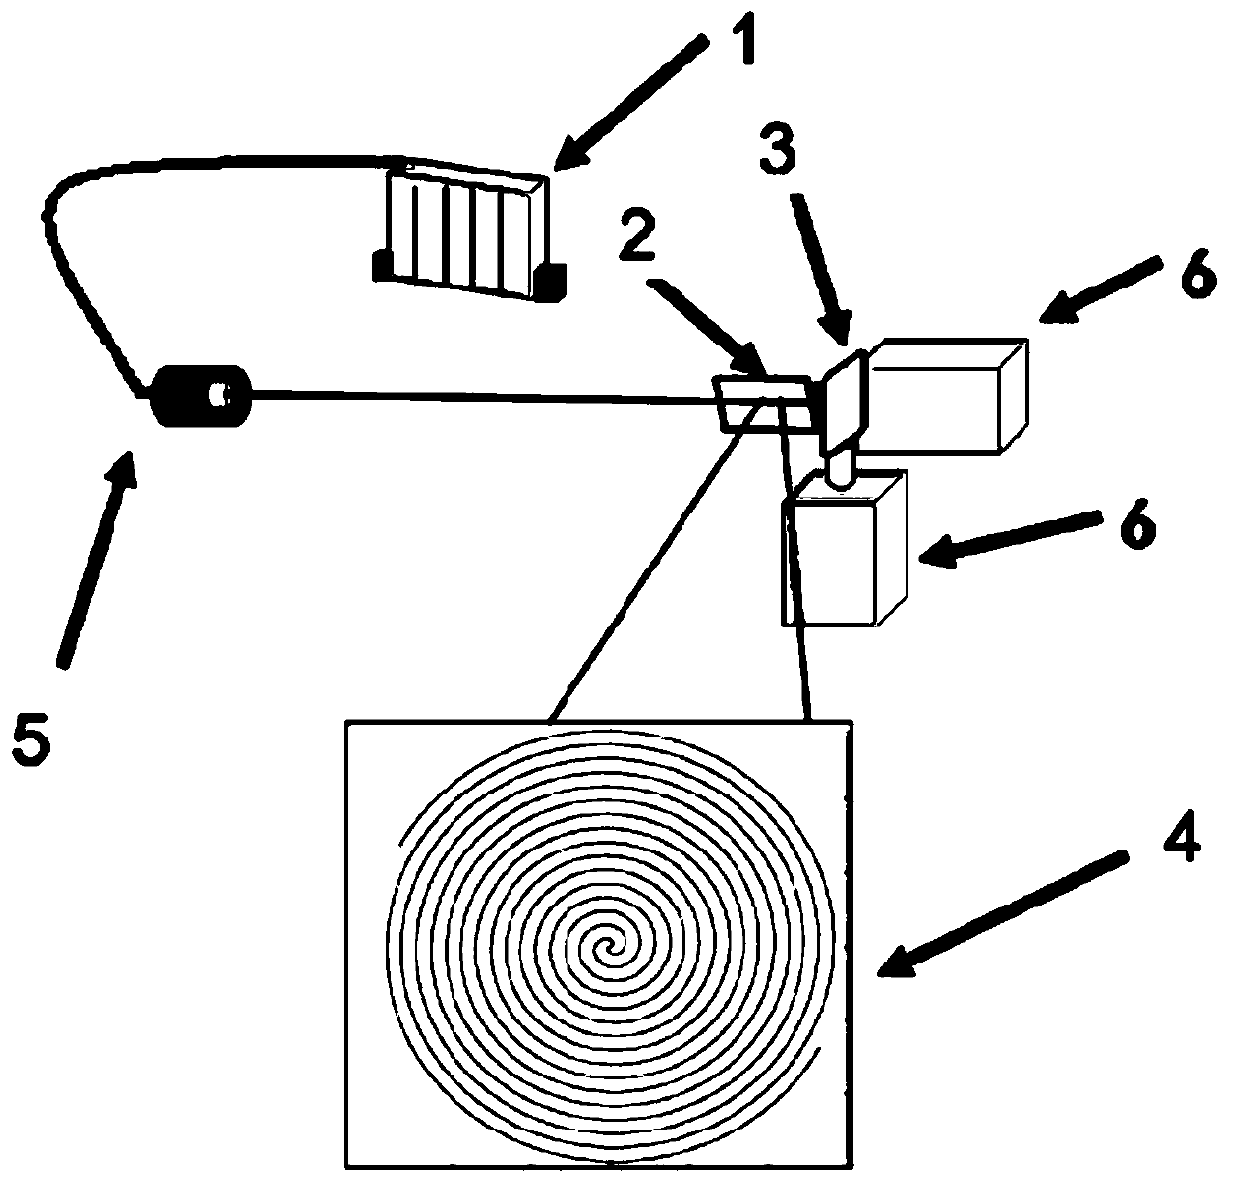 Spiral scanning method of OCT imaging device